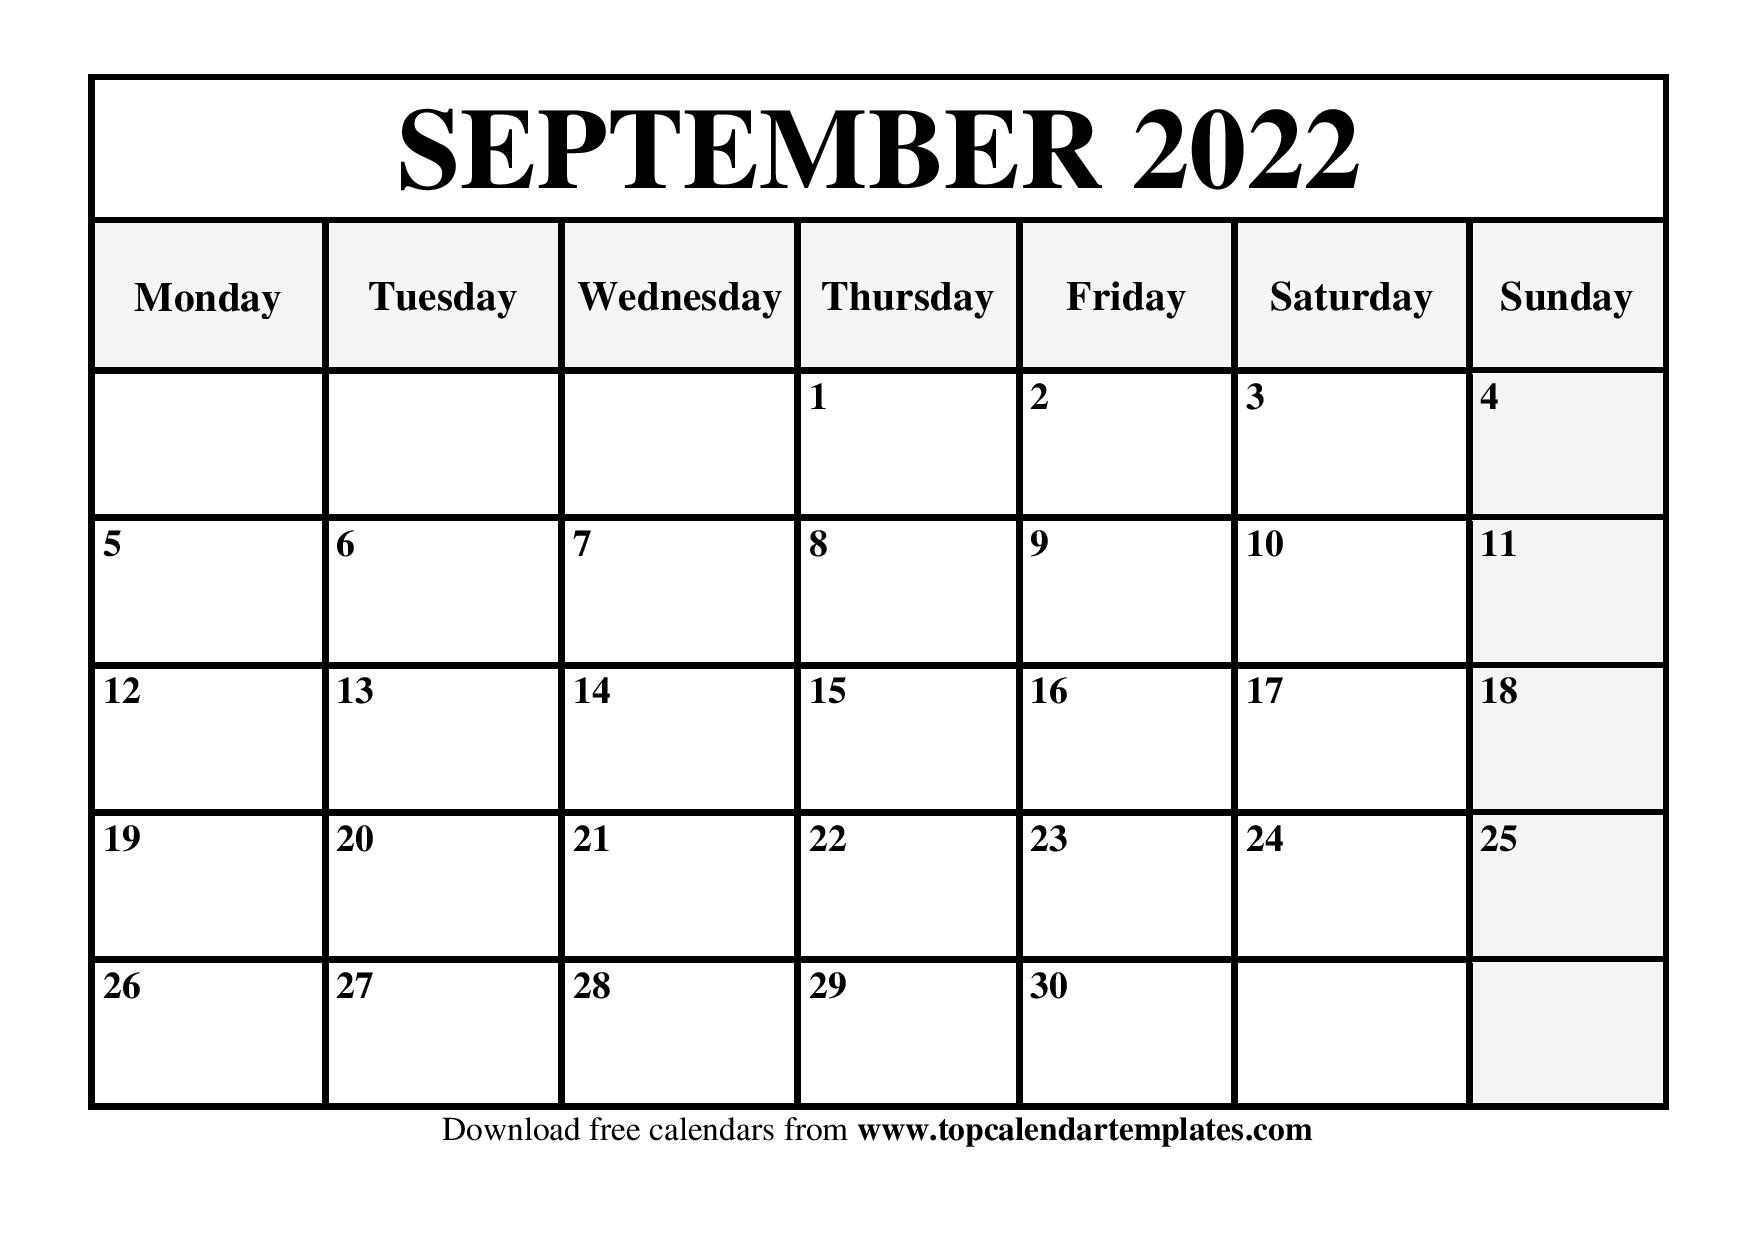 September 2022 Calendar Printable Printable Calendar September 2022 Templates - Pdf, Word, Excel